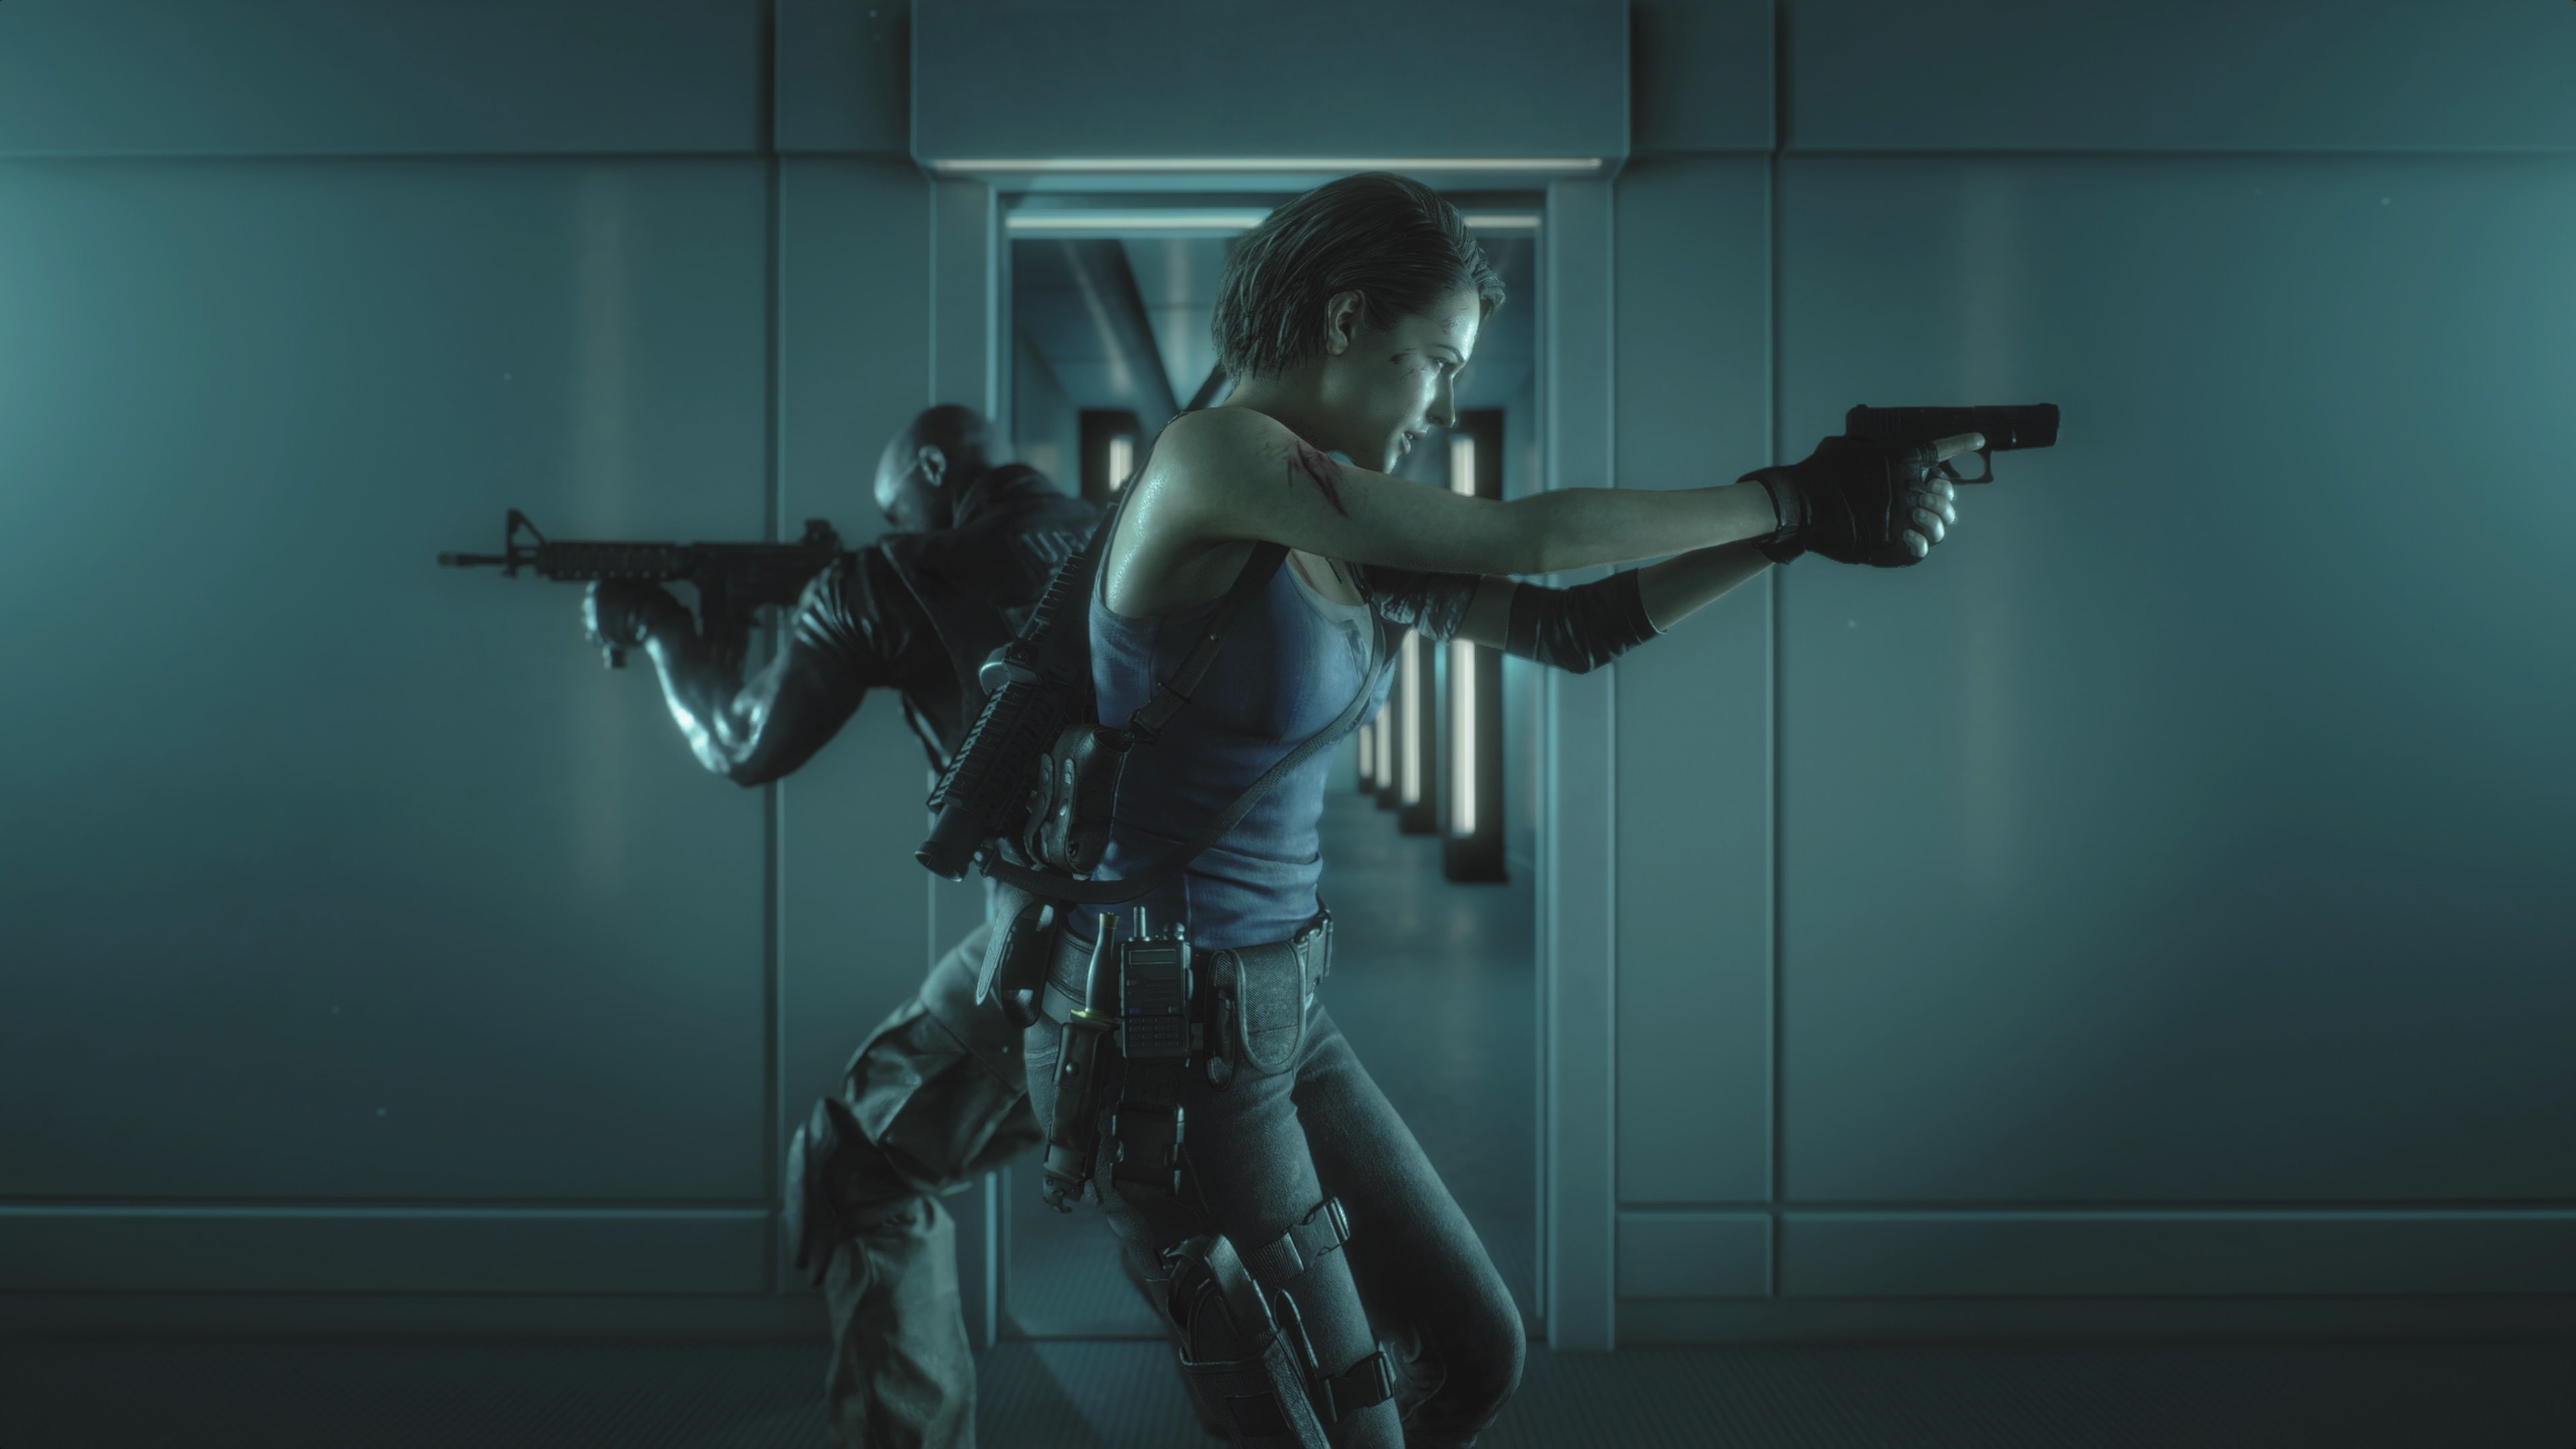 Resident Evil 3 - Secundario PS4 + PS5 - Pampa Games